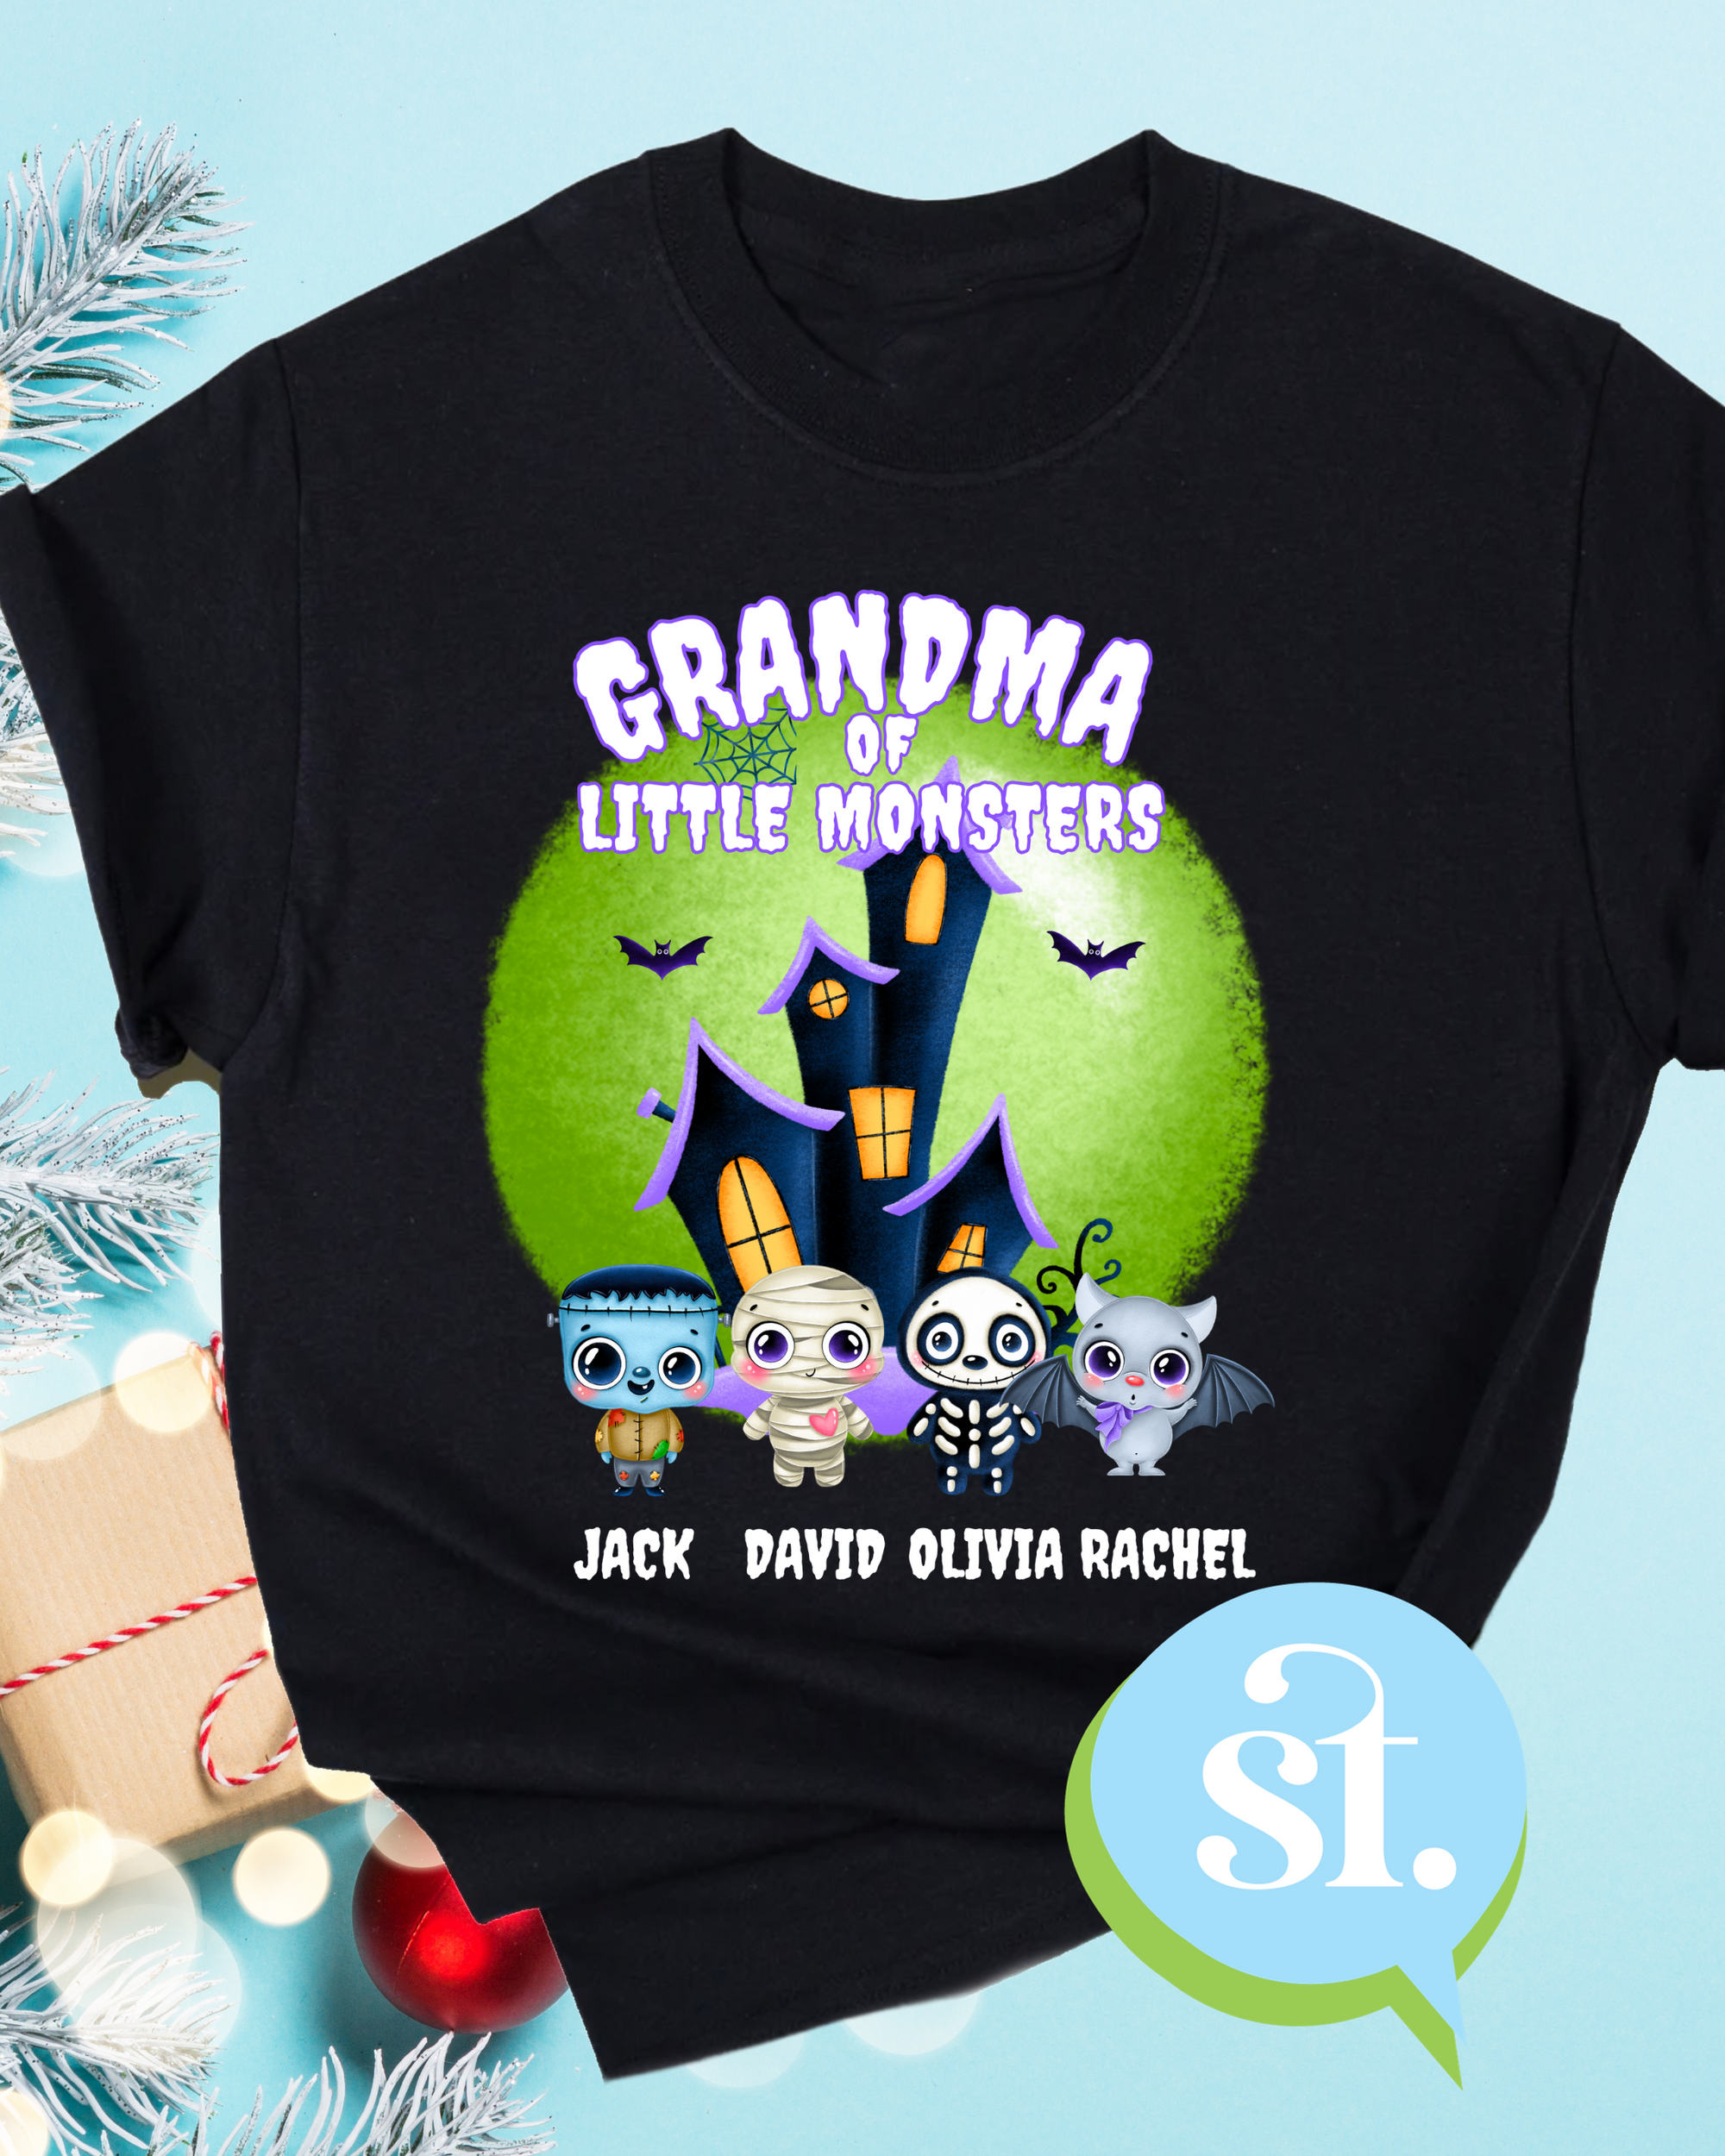 Grandma's Monsters Shirt - Design your Own